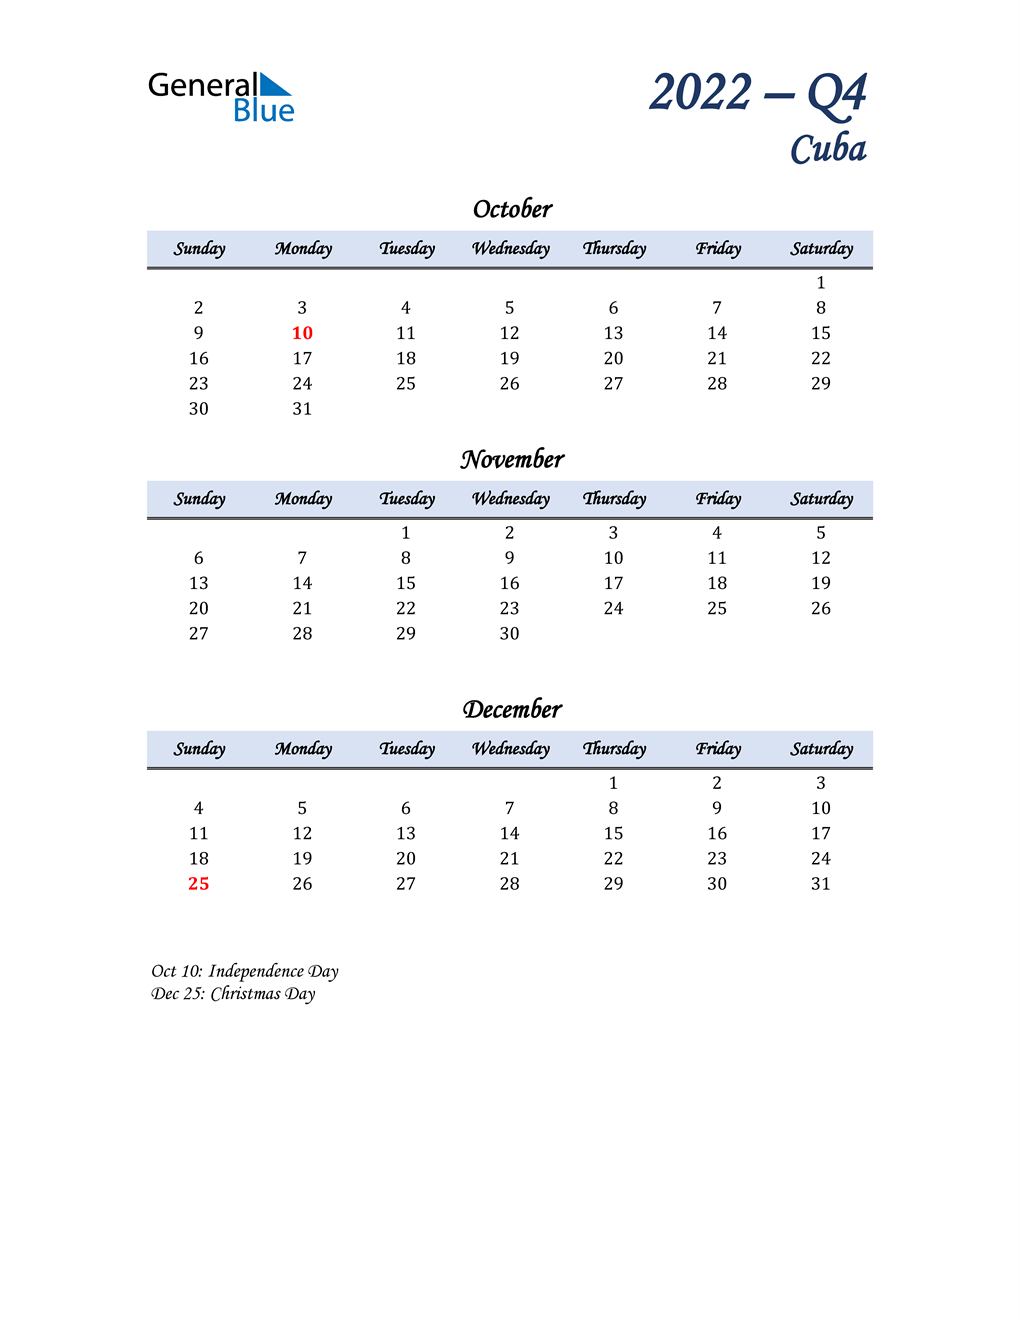  October, November, and December Calendar for Cuba